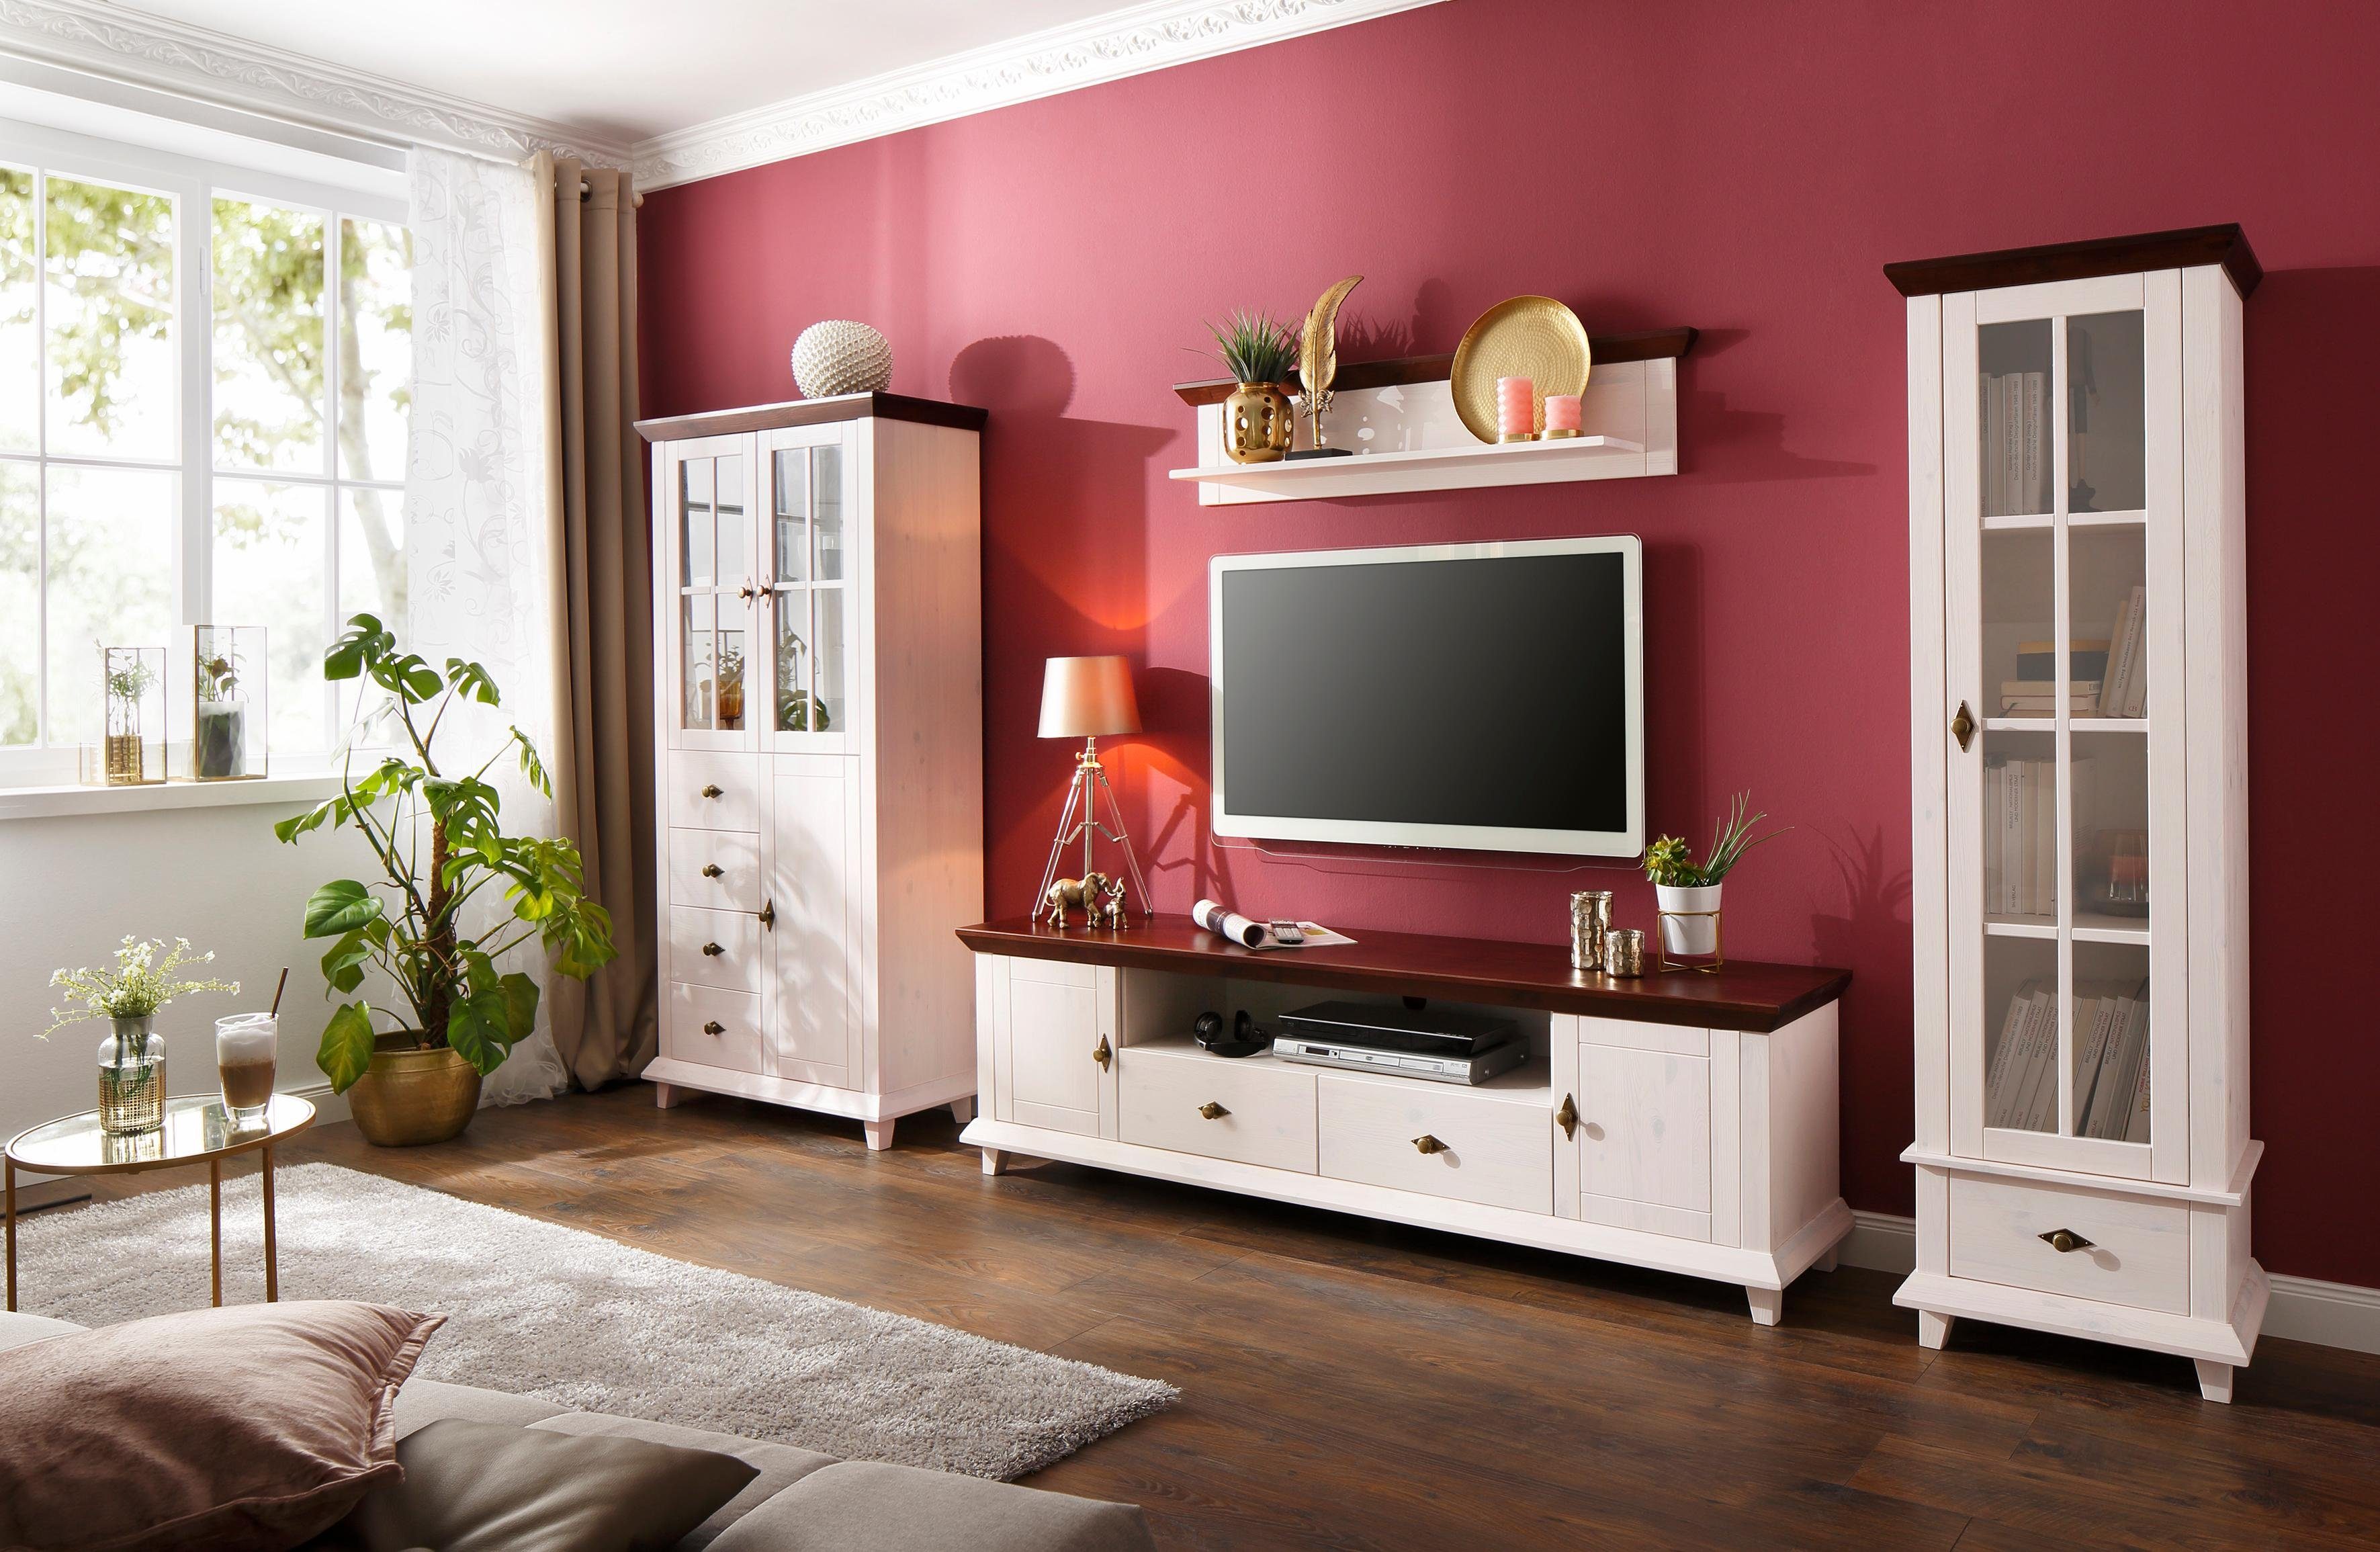 Otto - Home Affaire Home affaire tv-meubel Gali, massief hout, in 2 afmetingen, met praktische snoergeleiding